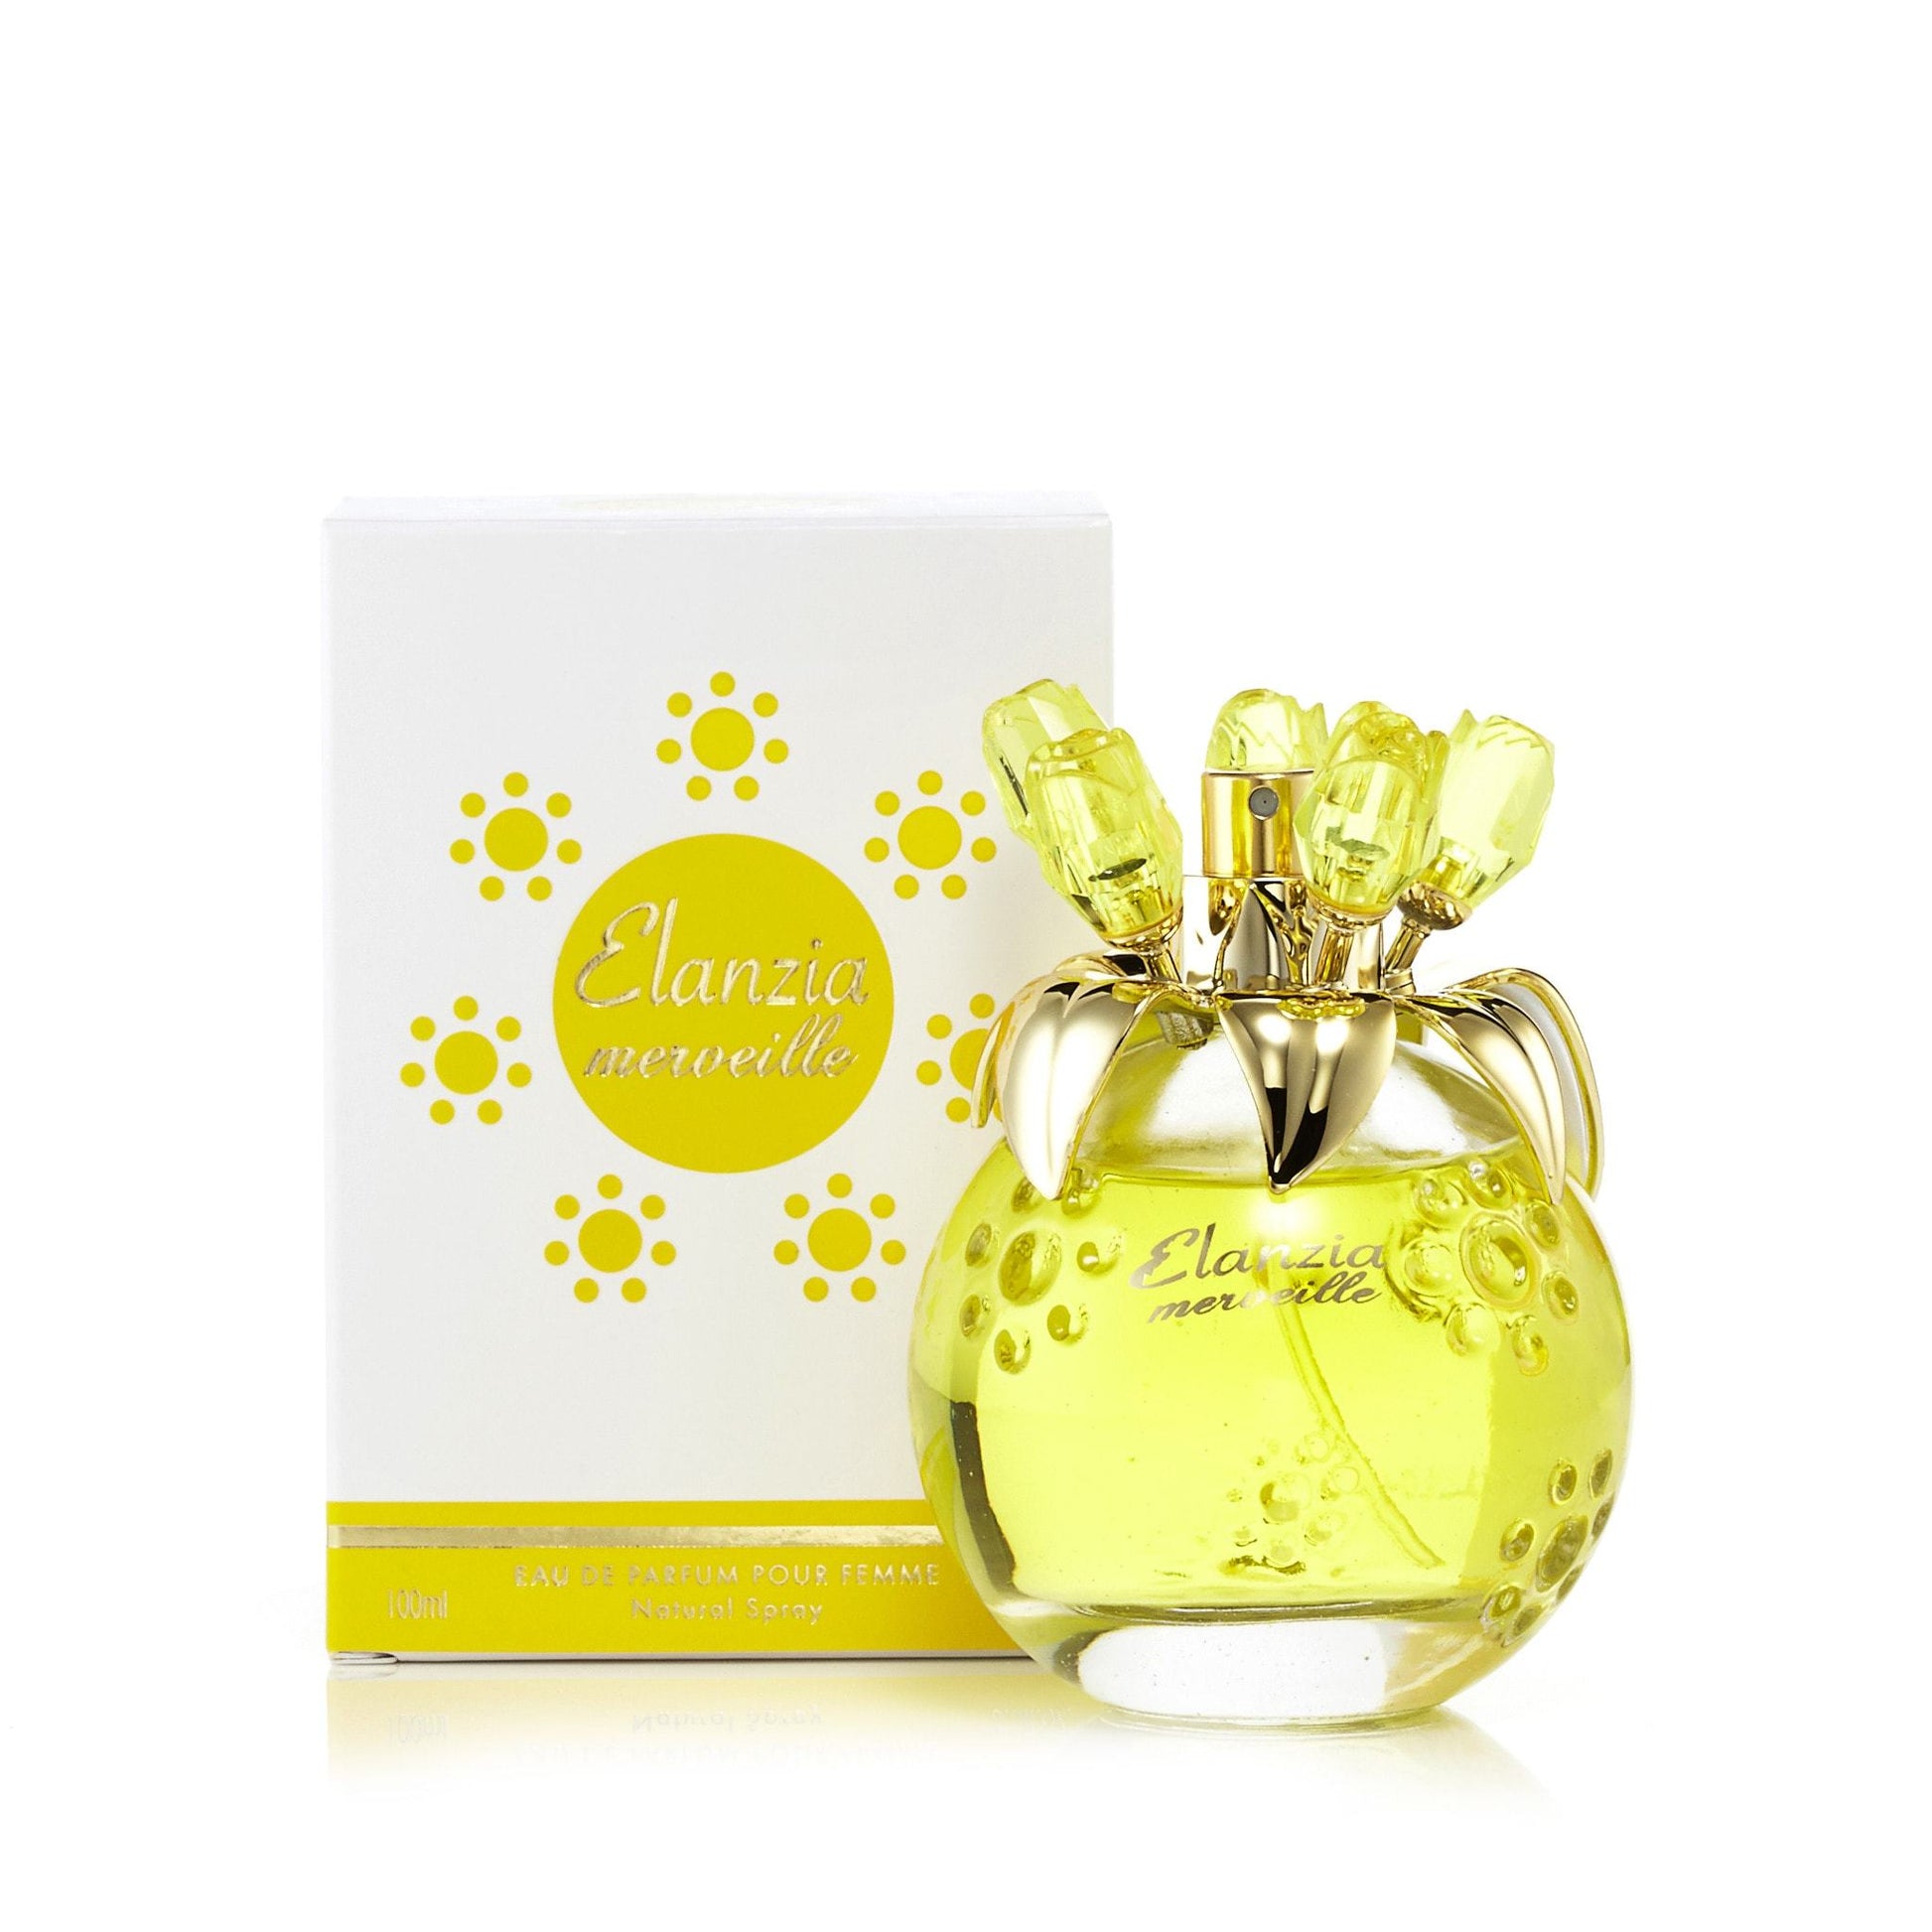 Elanzia Mervielle Yellow Eau de Parfum Spray for Women, Product image 2